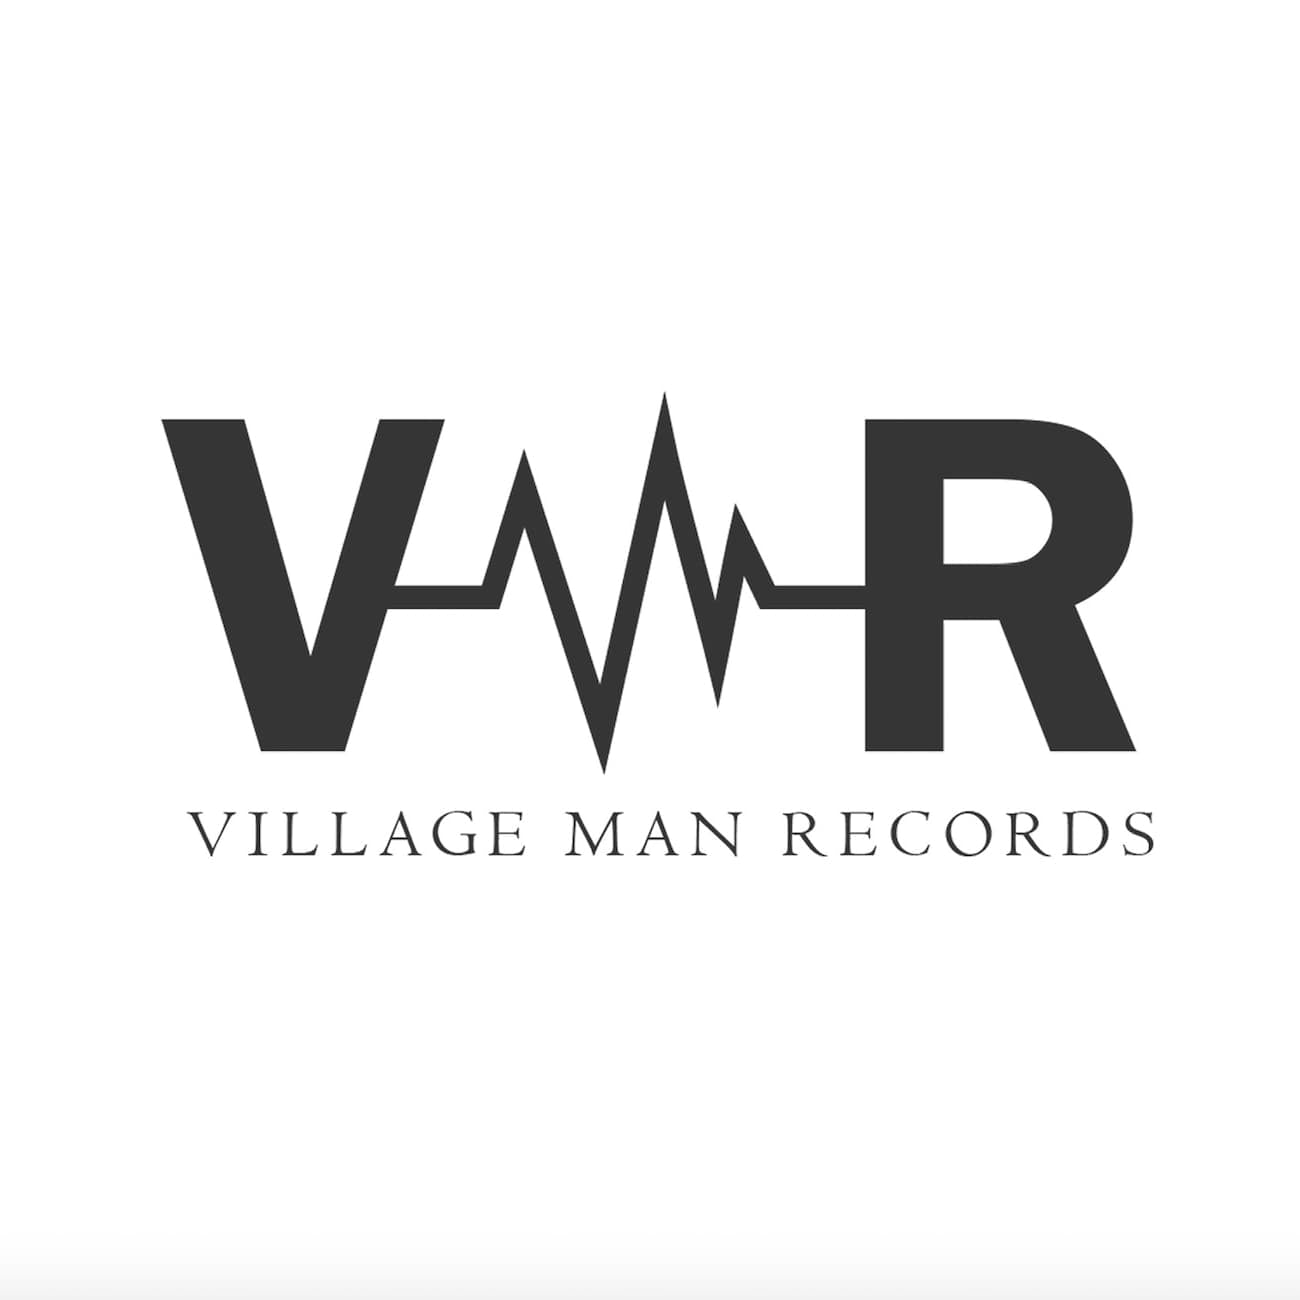 VIlage Man Records